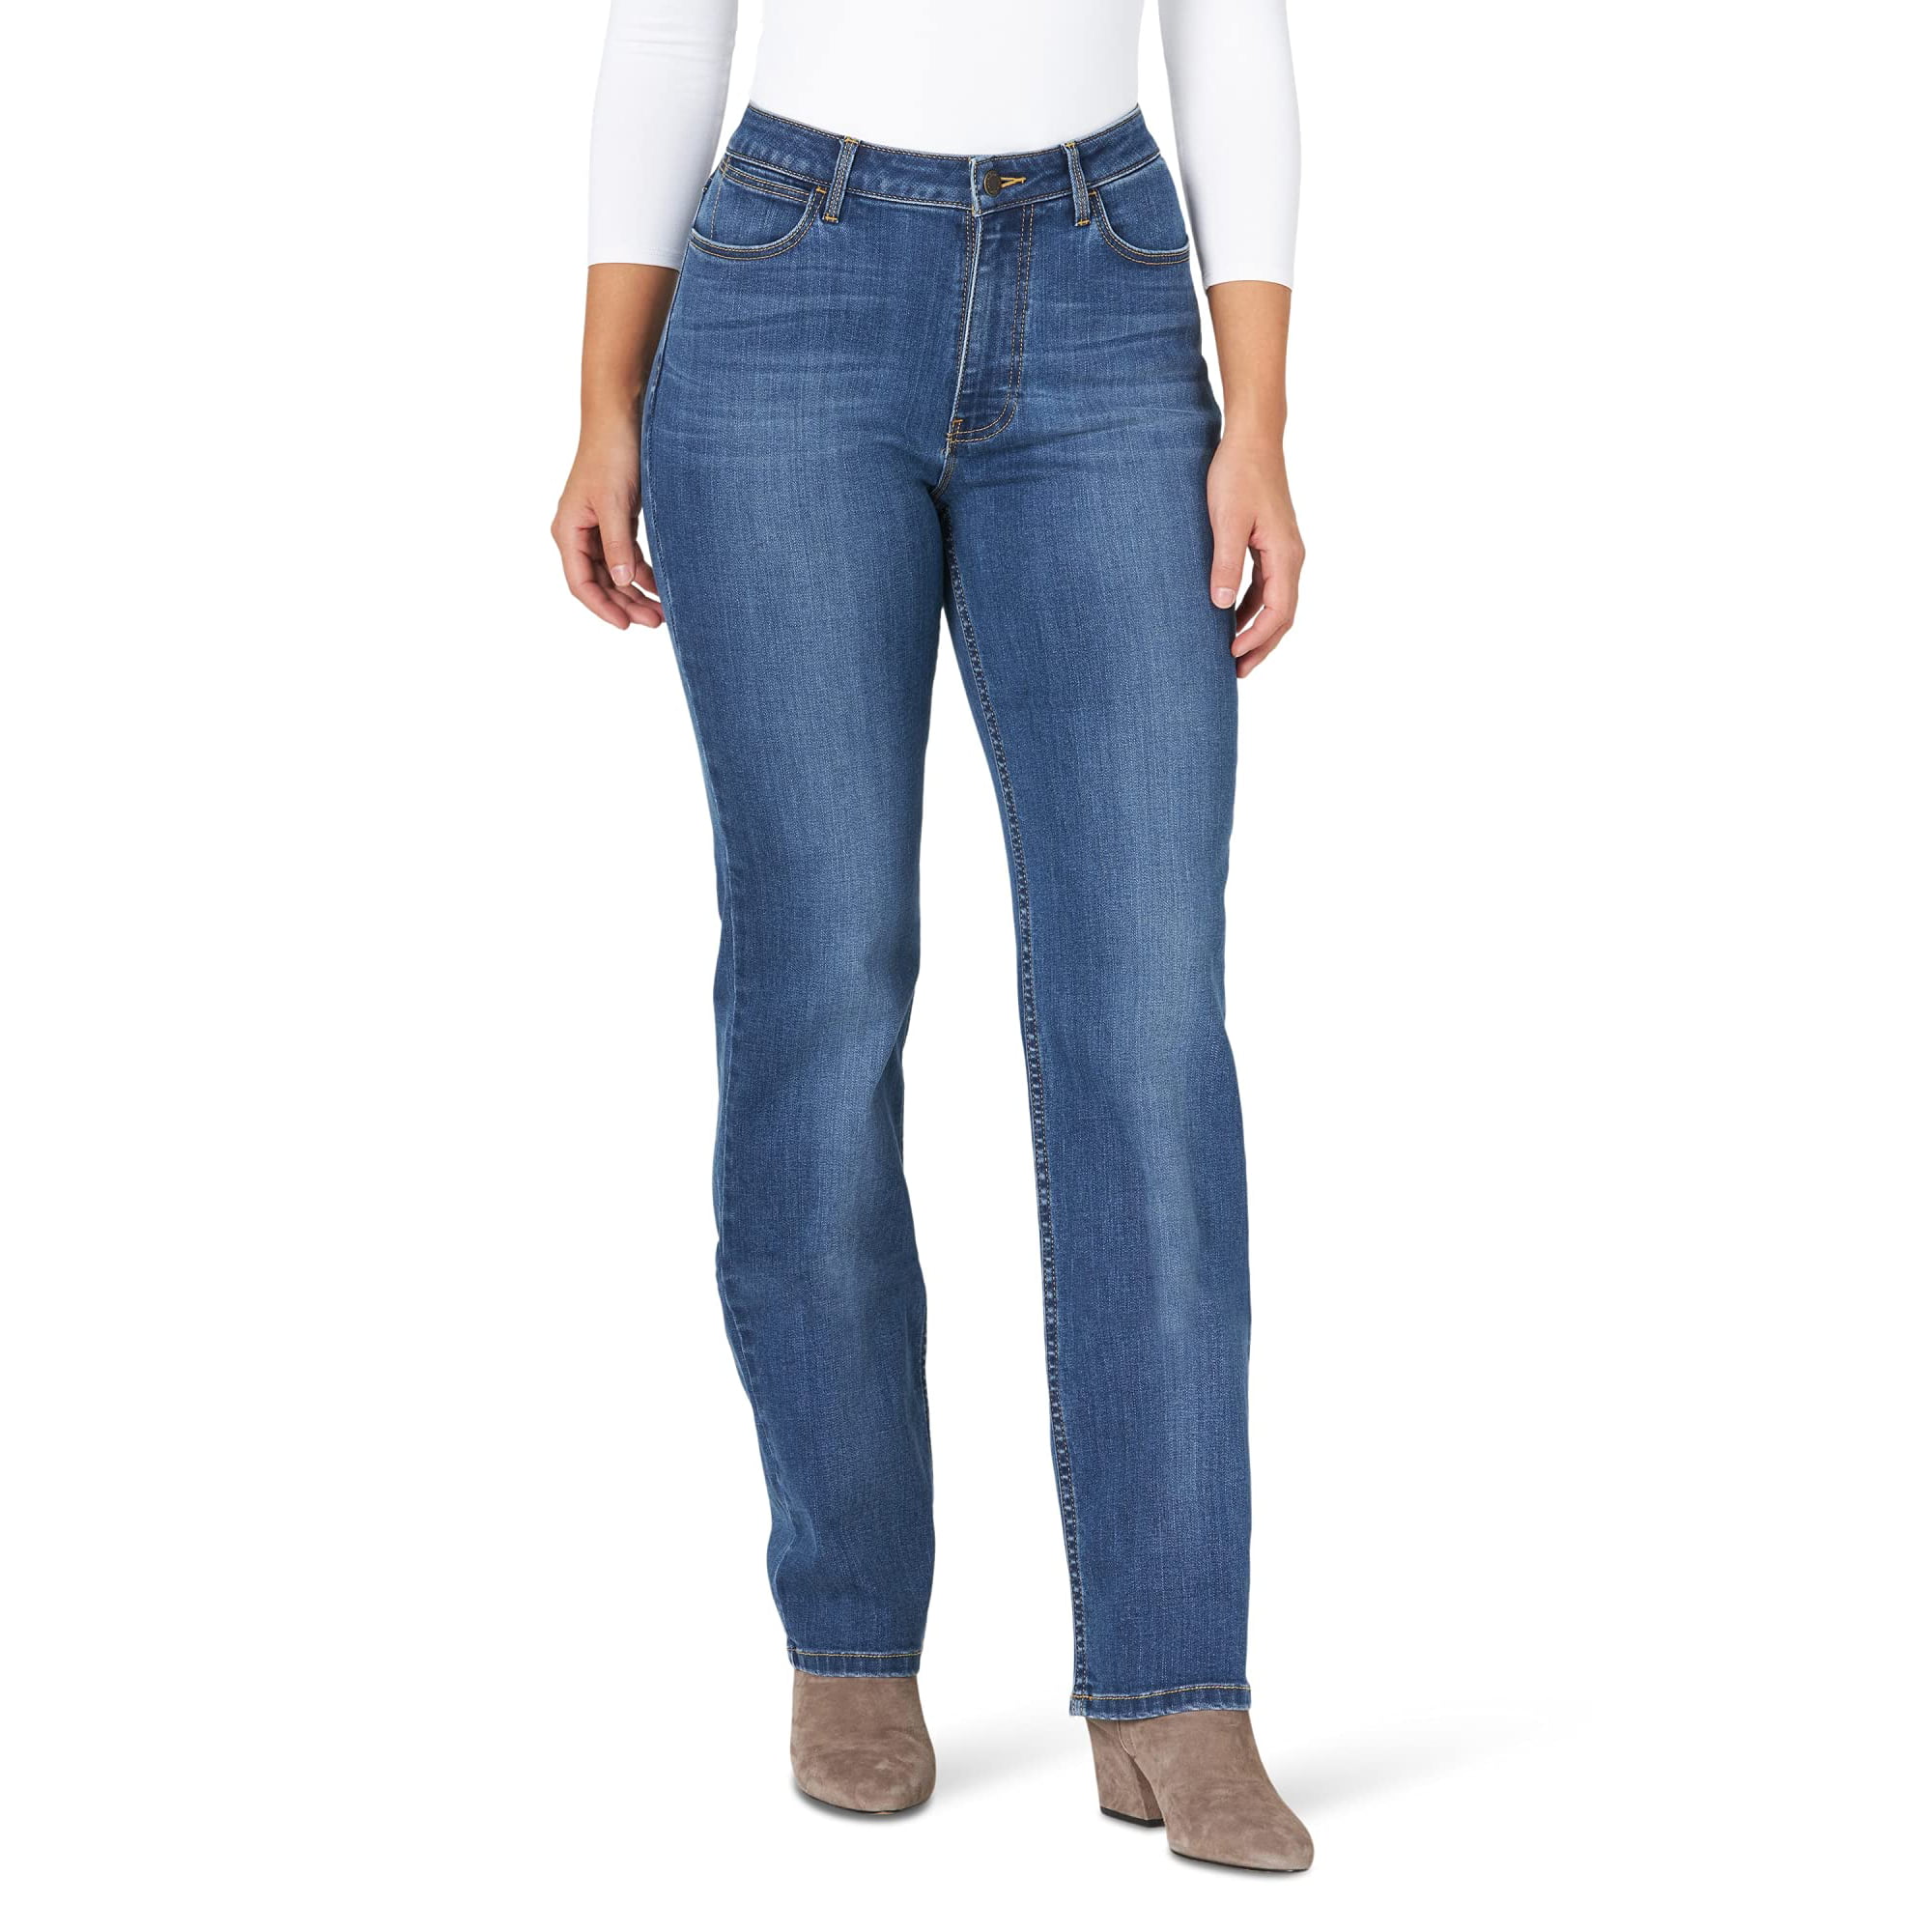 Wrangler Women's High Rise True Straight Fit Jean, Hudson, 4W x 30L |  Walmart Canada